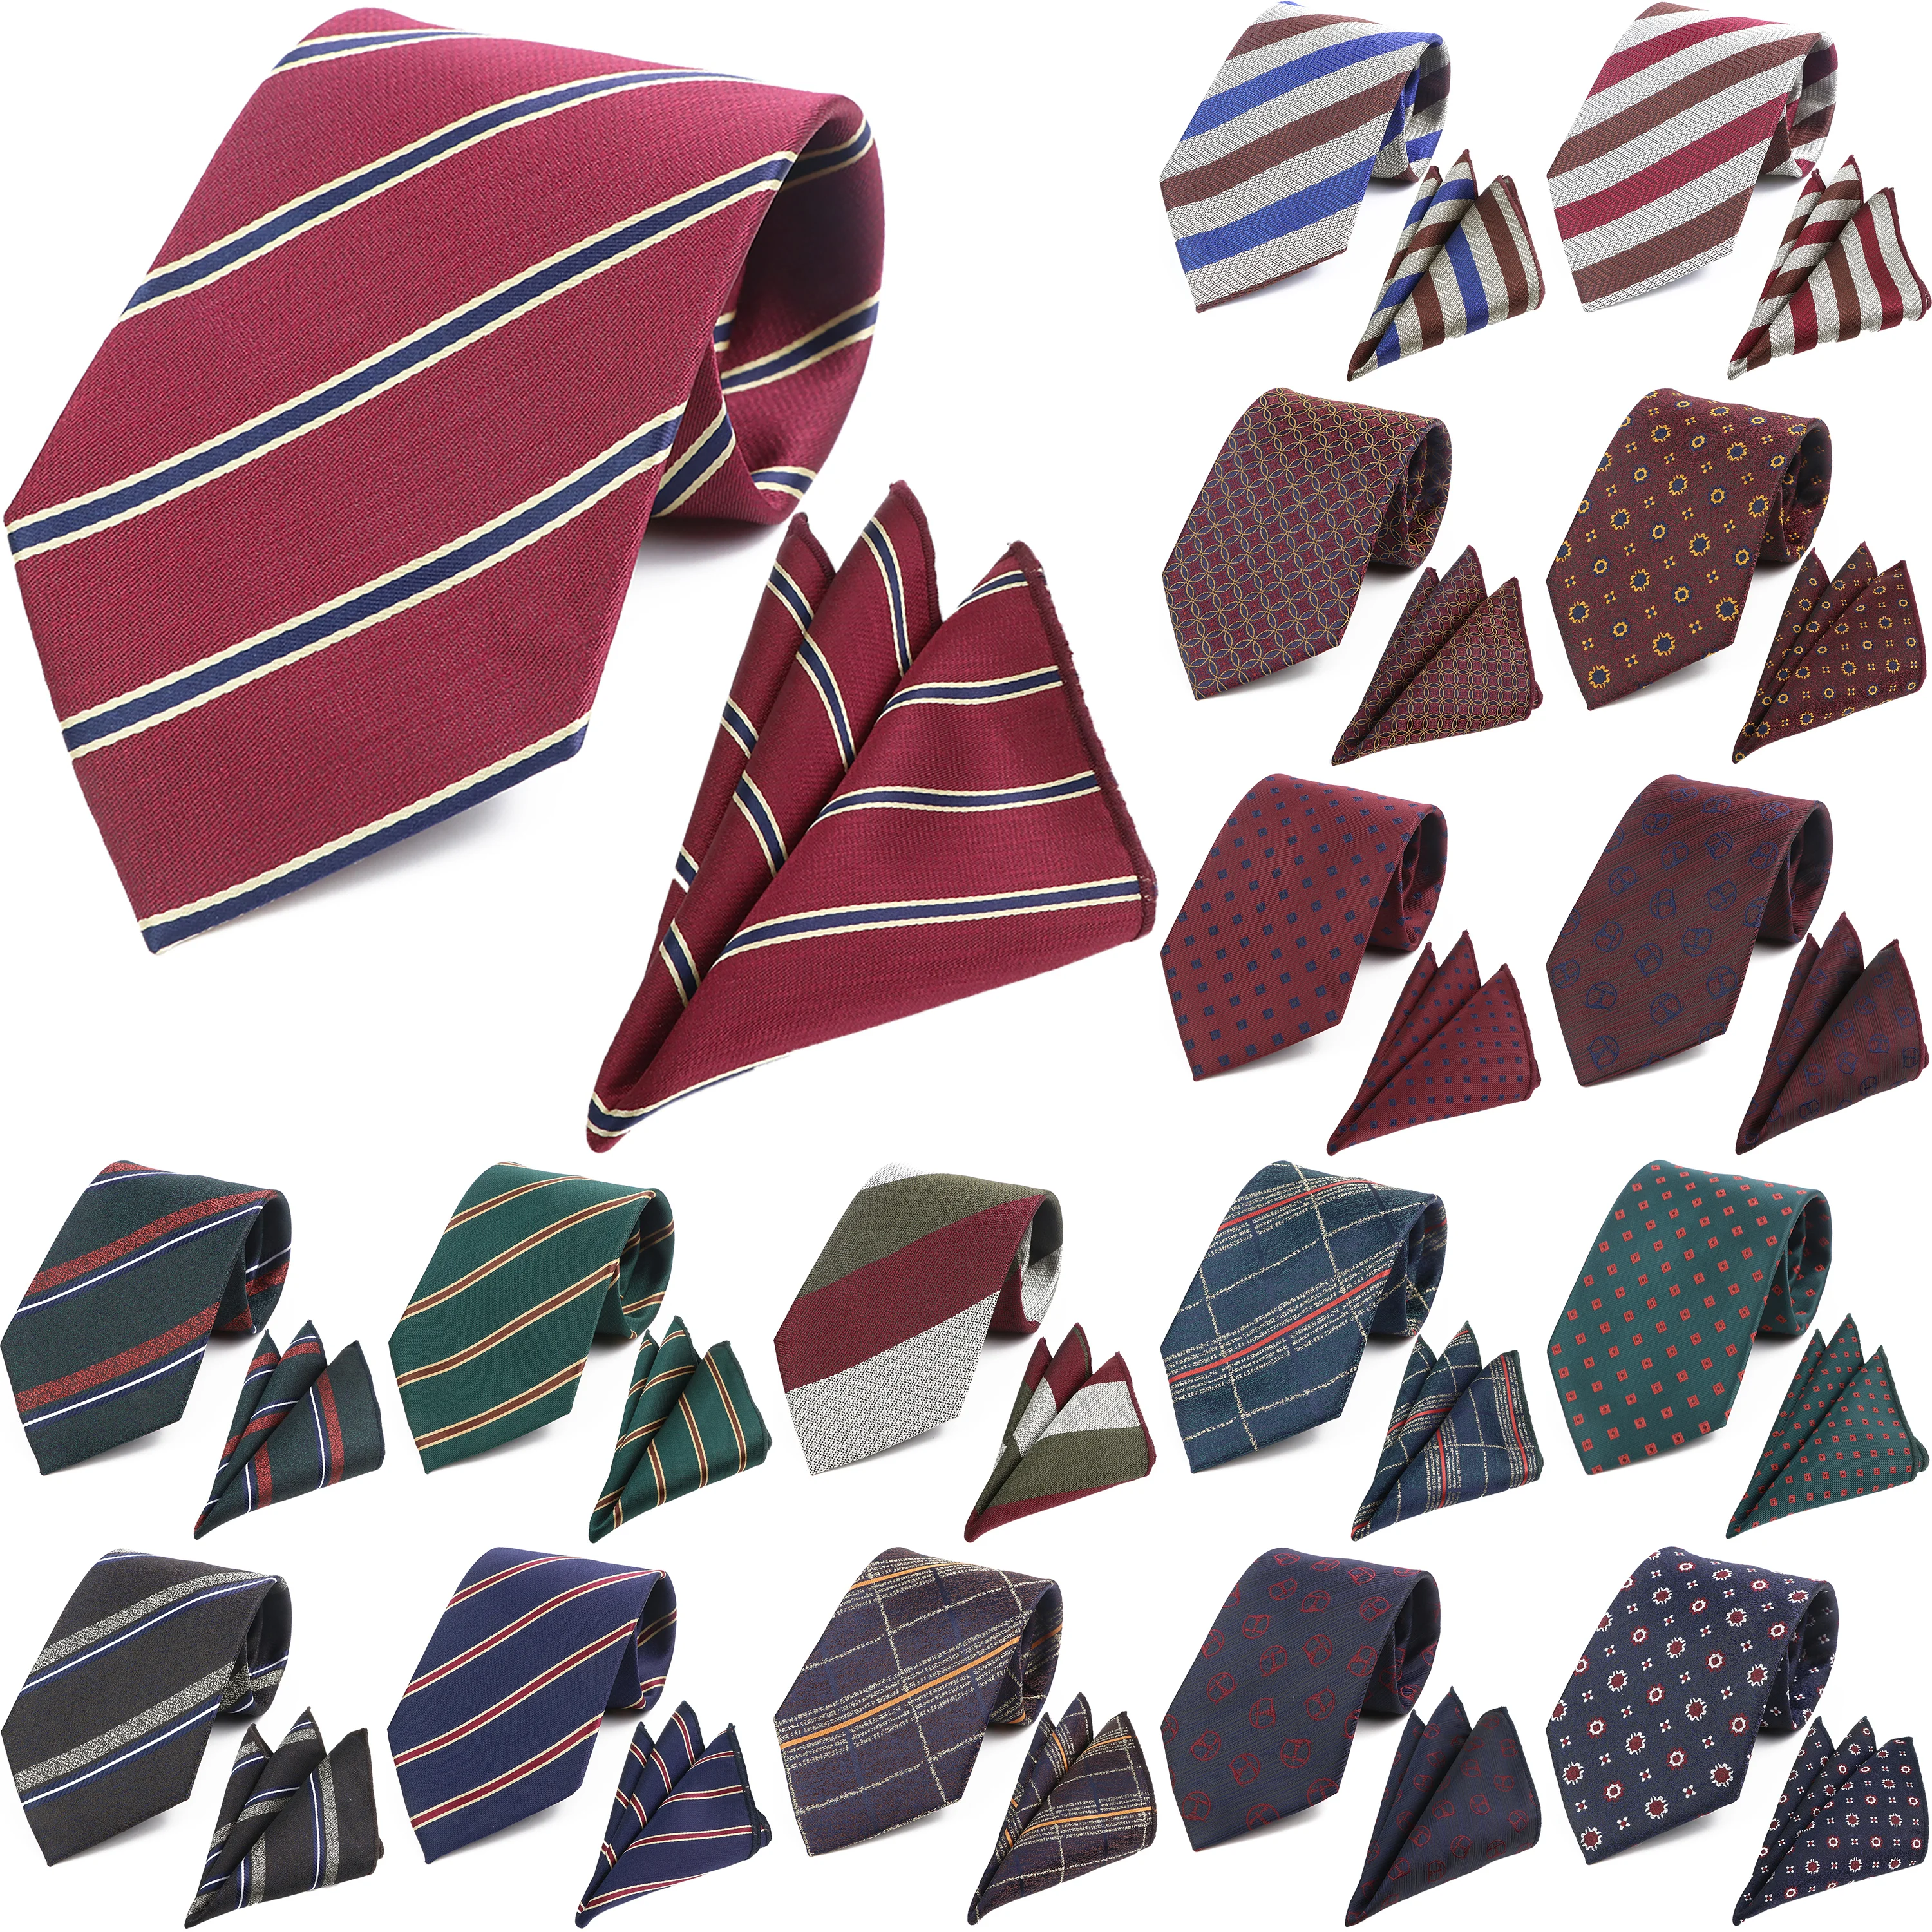 

Classic Fashion Striped Mens Tie Handkerchief Sets For Business Meeting Office Cravat Gift Jacquard Woven Necktie Suit Accessory